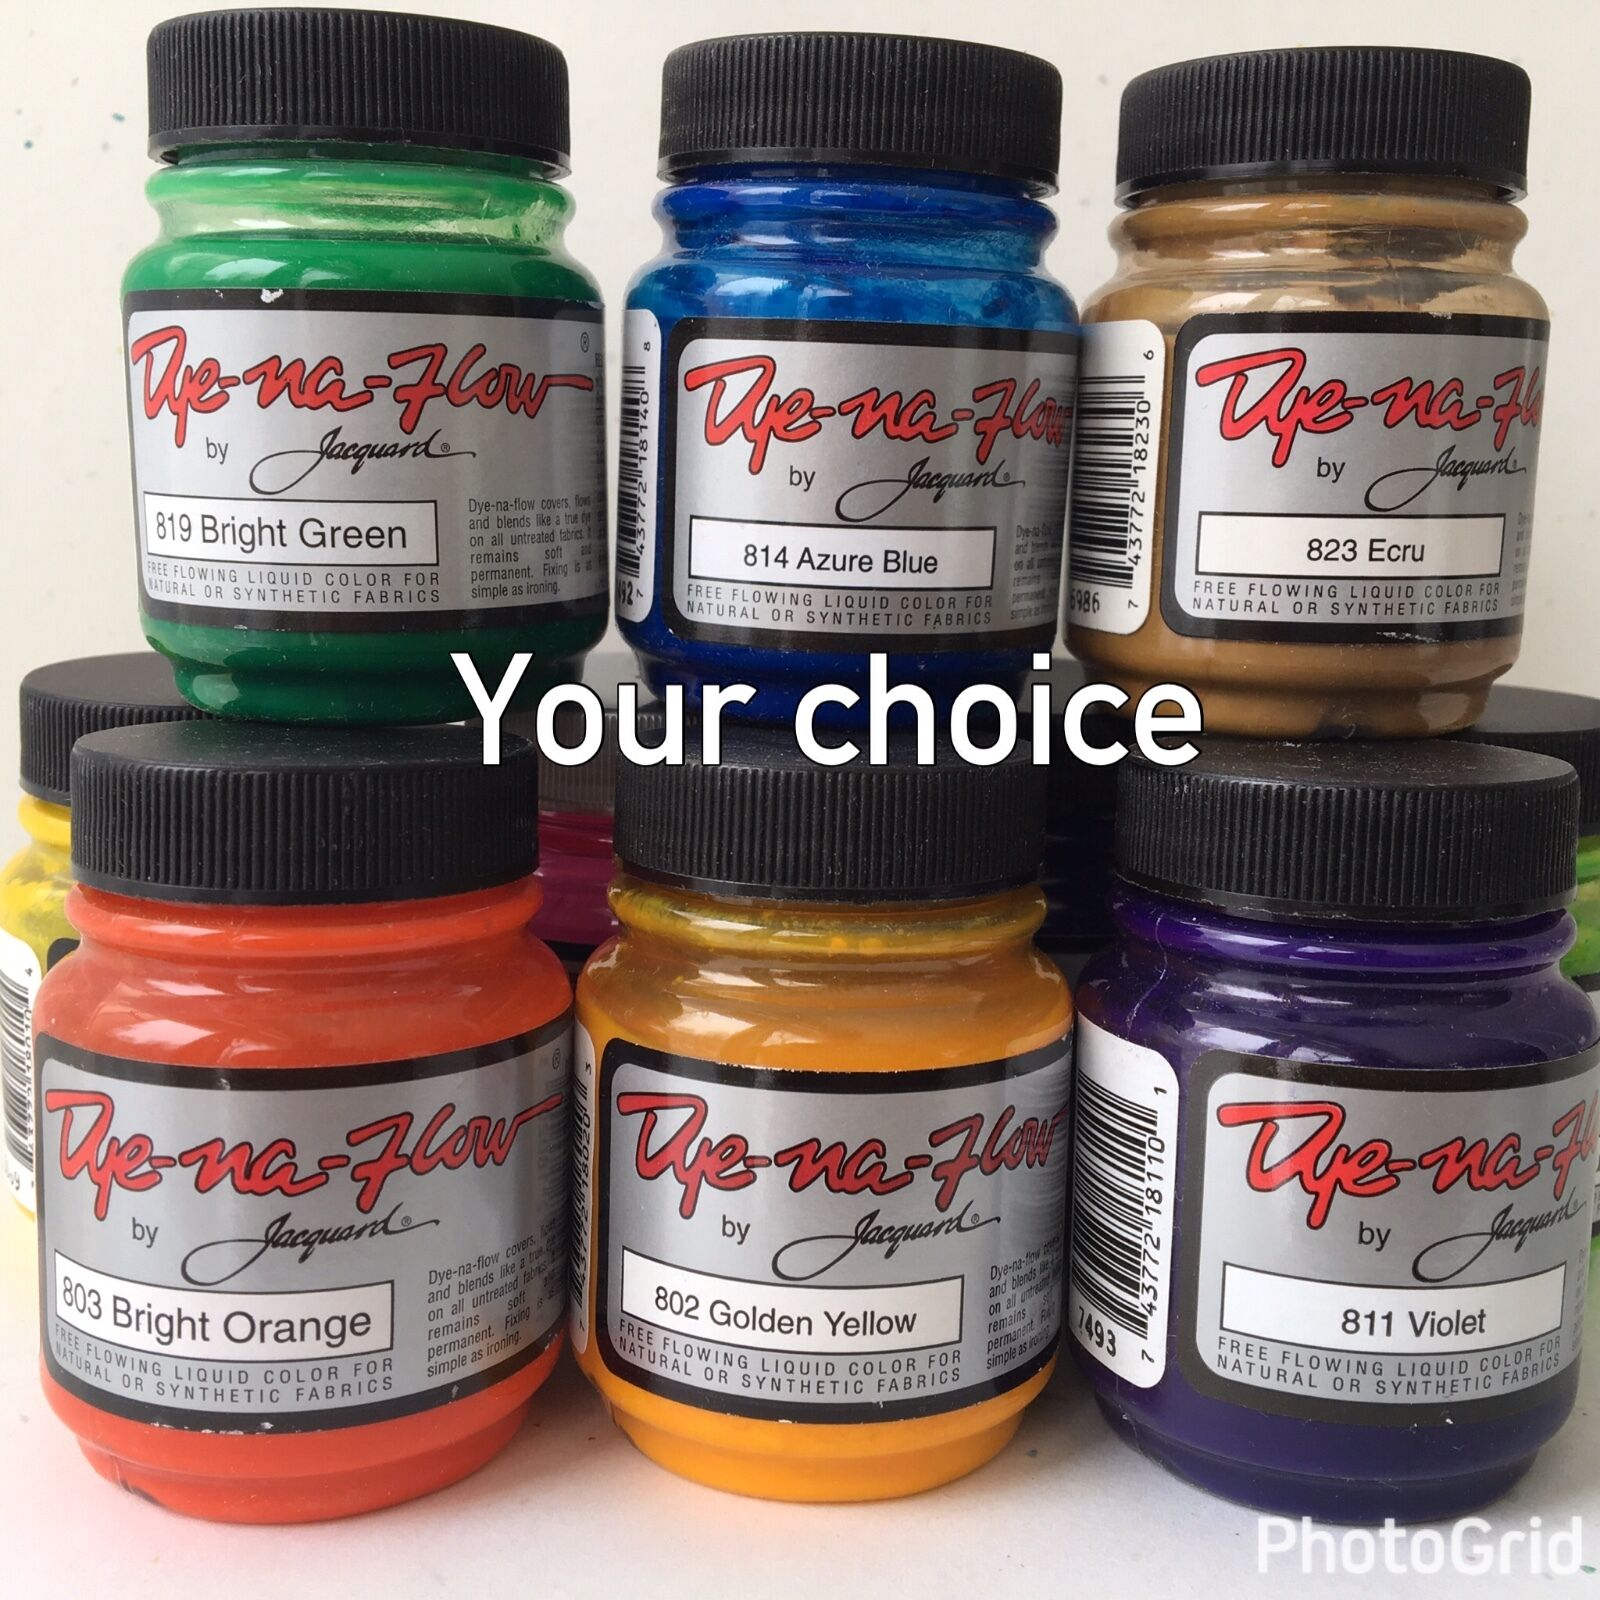 Jacquard Dye-na-flow Liquid Color For Fabrics 2.25 Fl. Oz.~ Your Color Choice